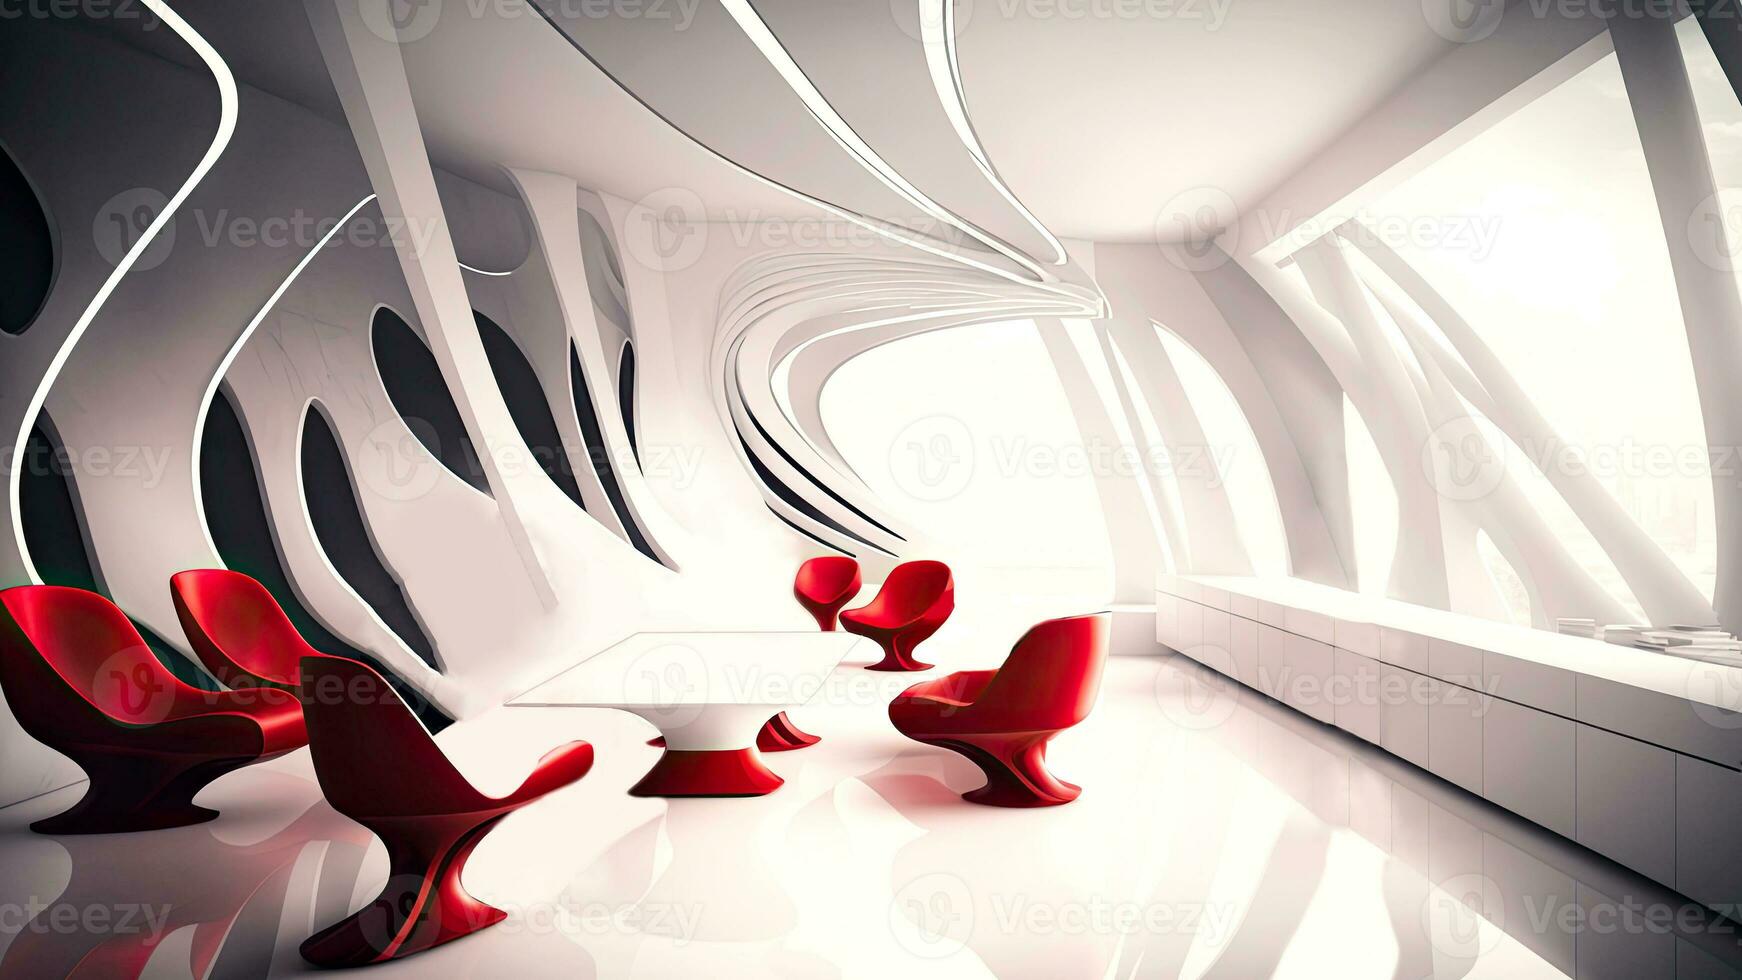 modern interieur met elegant meubilair. foto